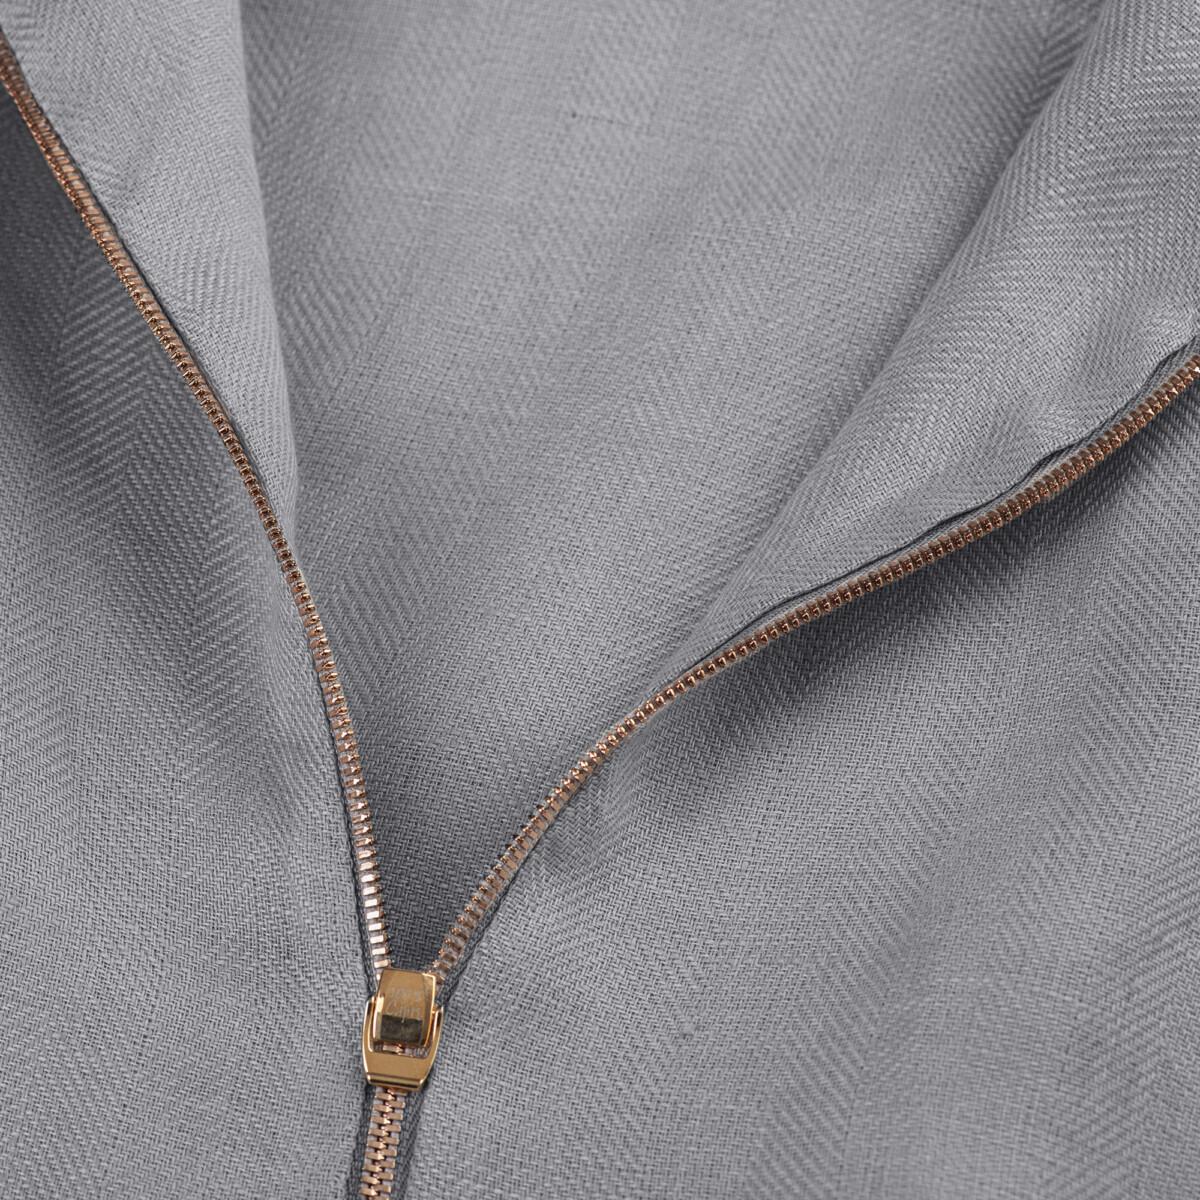 Tuta Zip  for woman  100% Capri dark grey linen jumpsuit detail